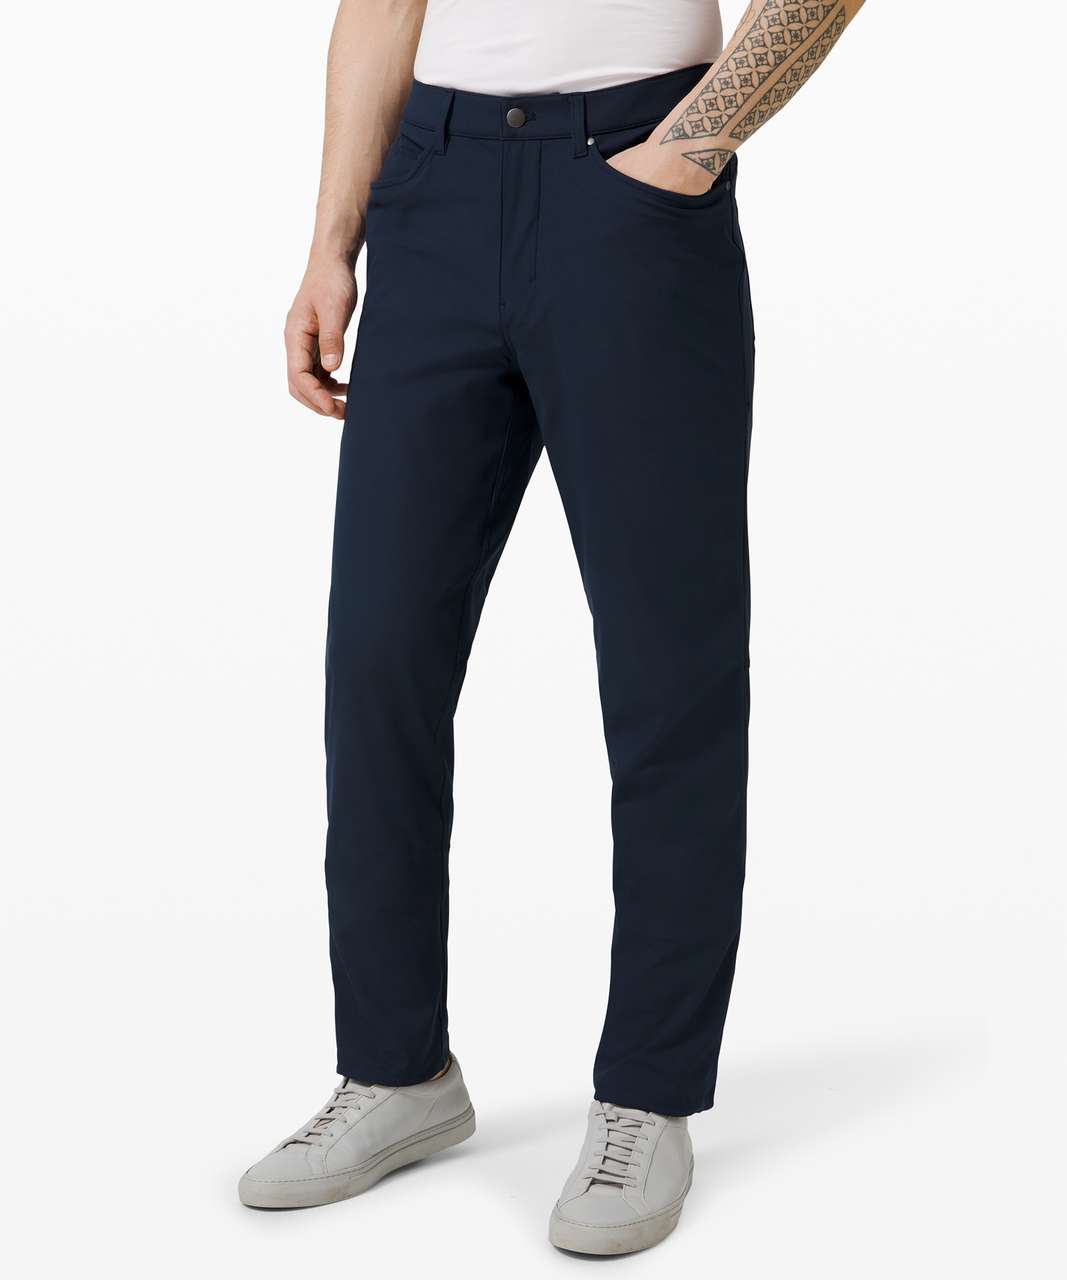 Navy Blue Pants - Trouser Pants - Dress Pants - $52.00 - Lulus